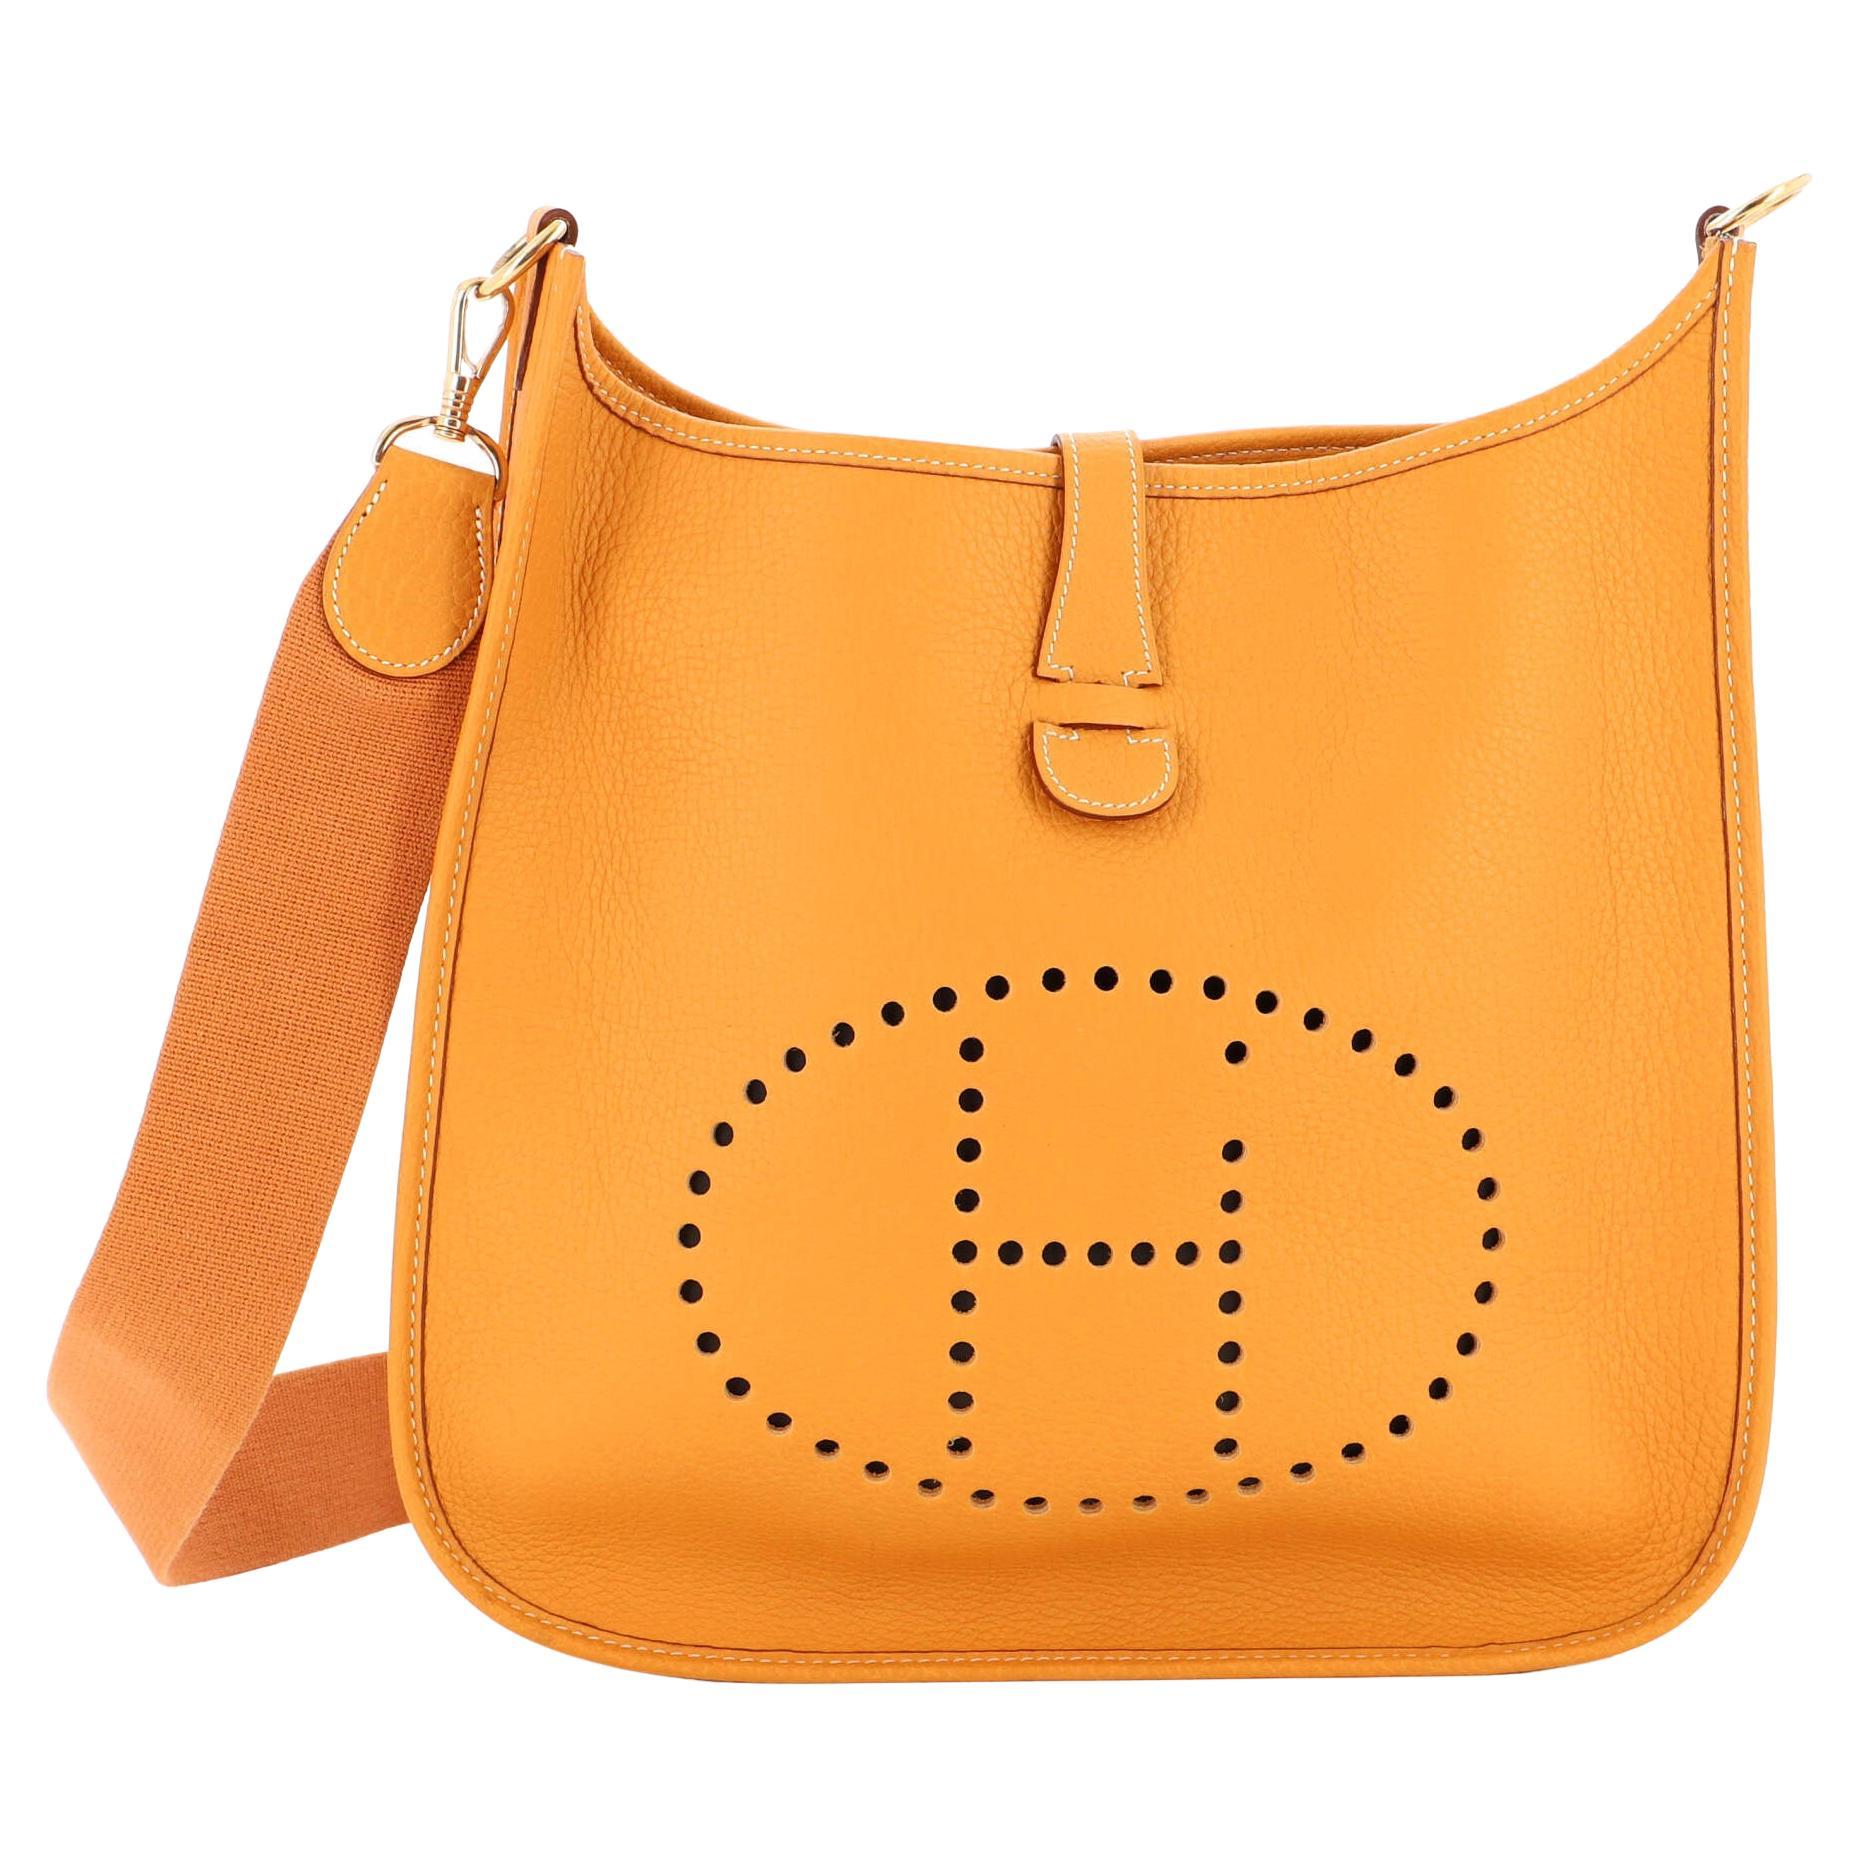 Hermes Bag With Holes - 9 For Sale on 1stDibs